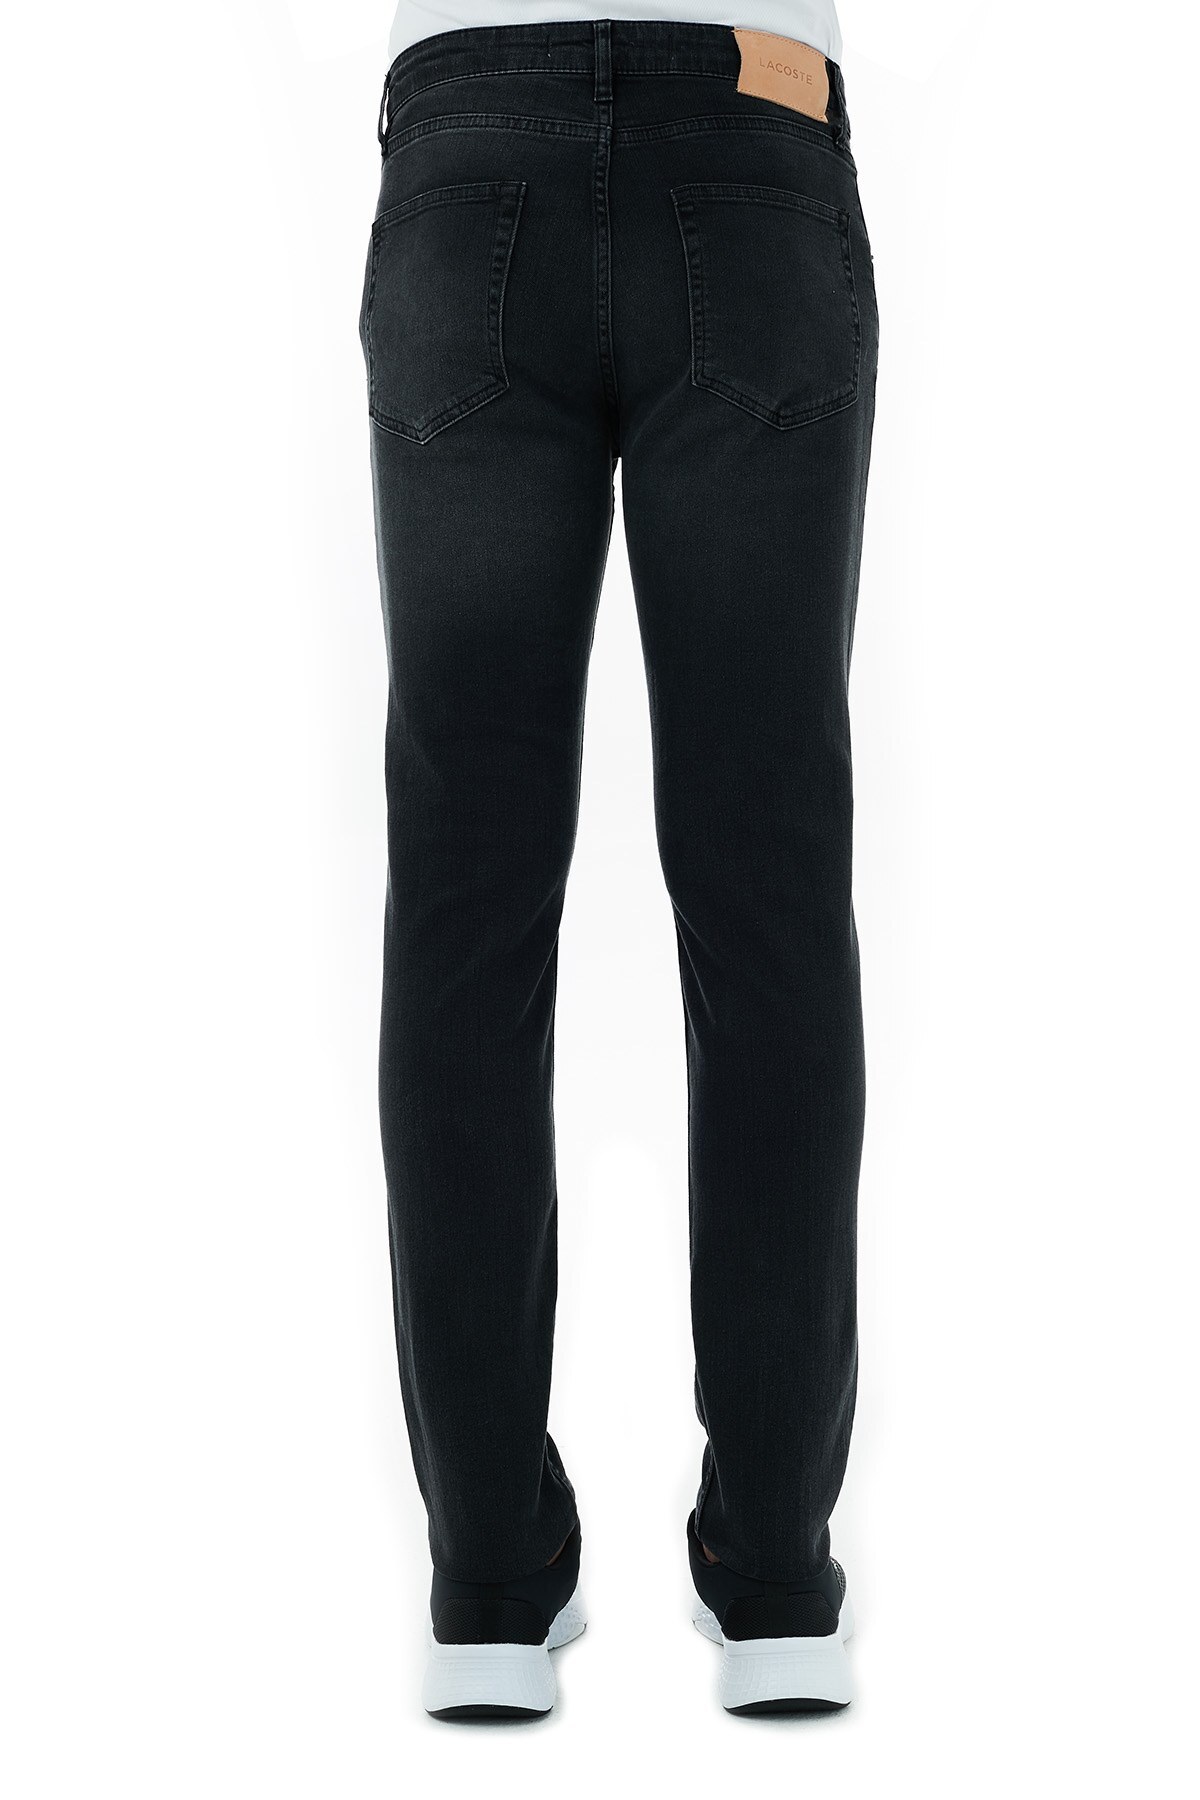 Lacoste Slim Fit Pamuklu Erkek Pantolon HH2054 54G GRİ